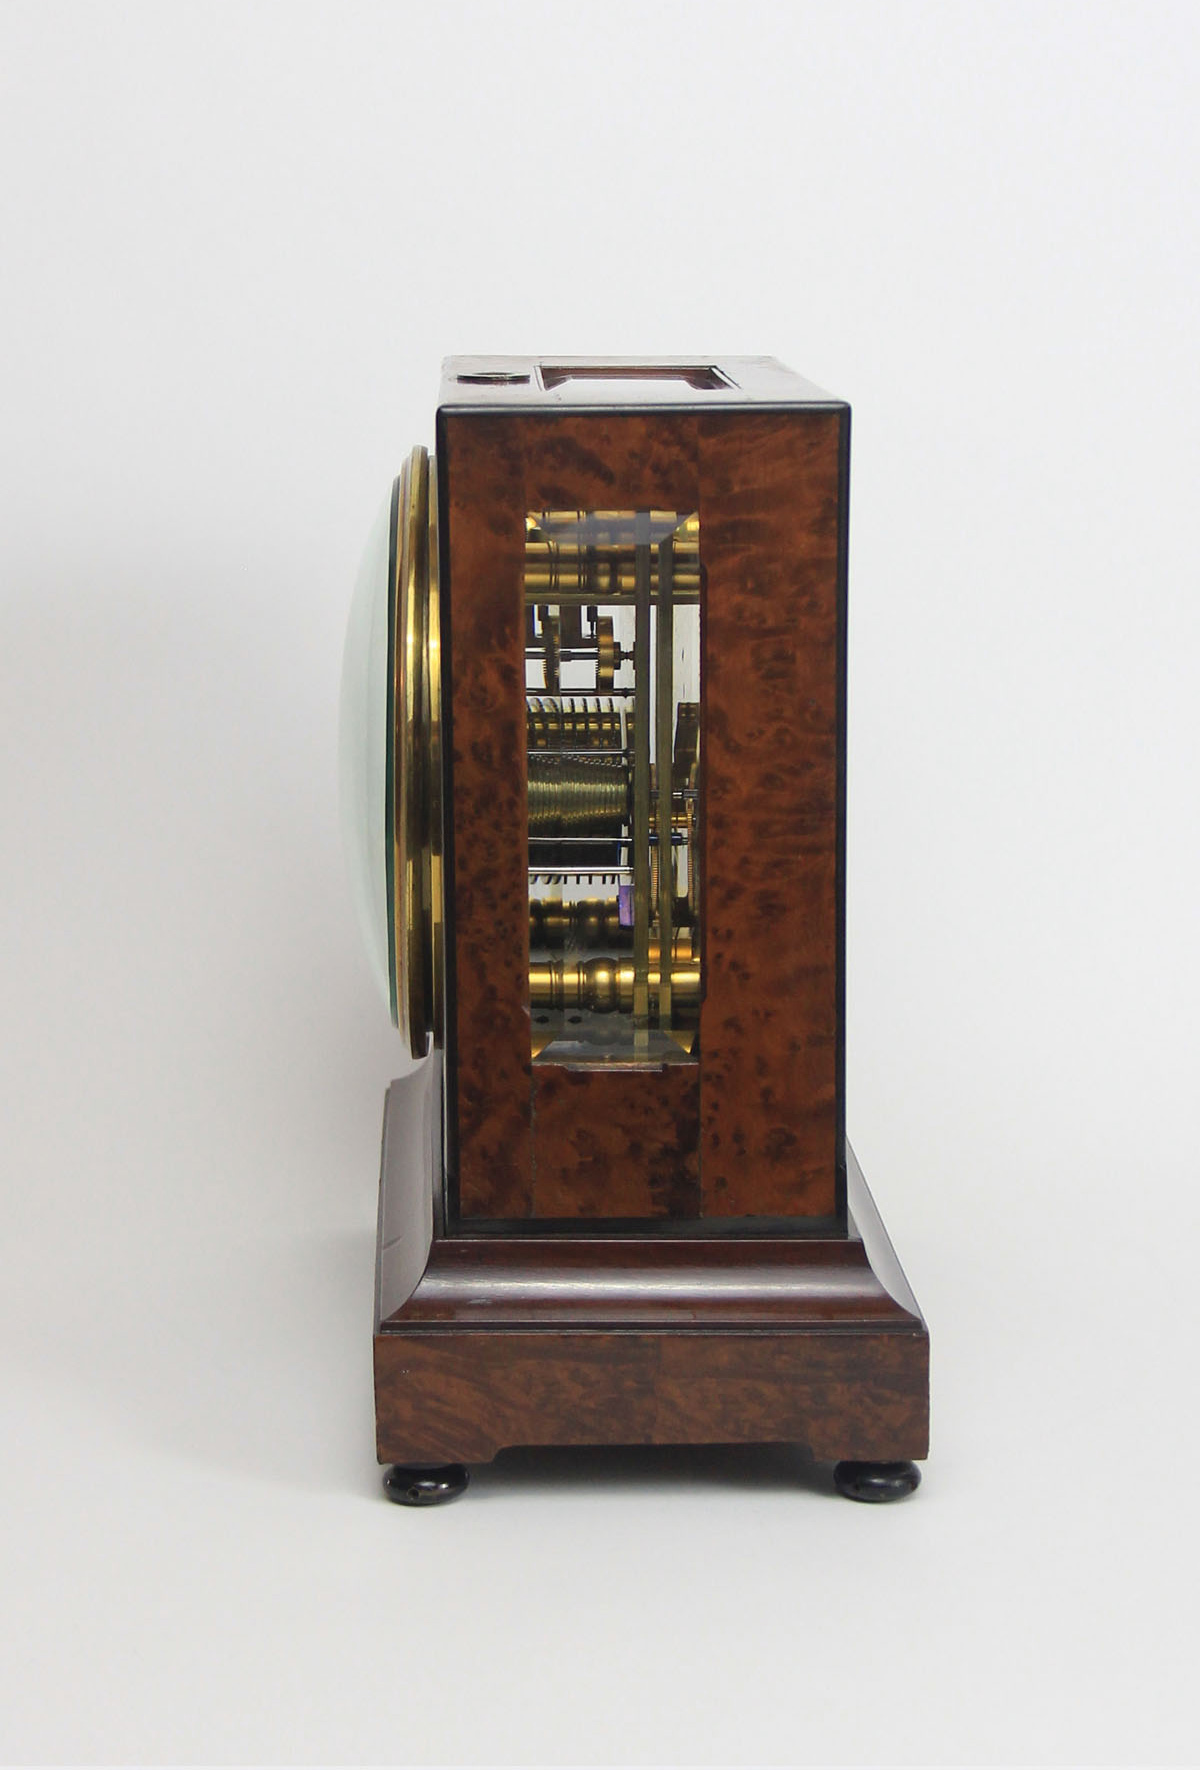 Charles Frodsham Mantel Chronometer